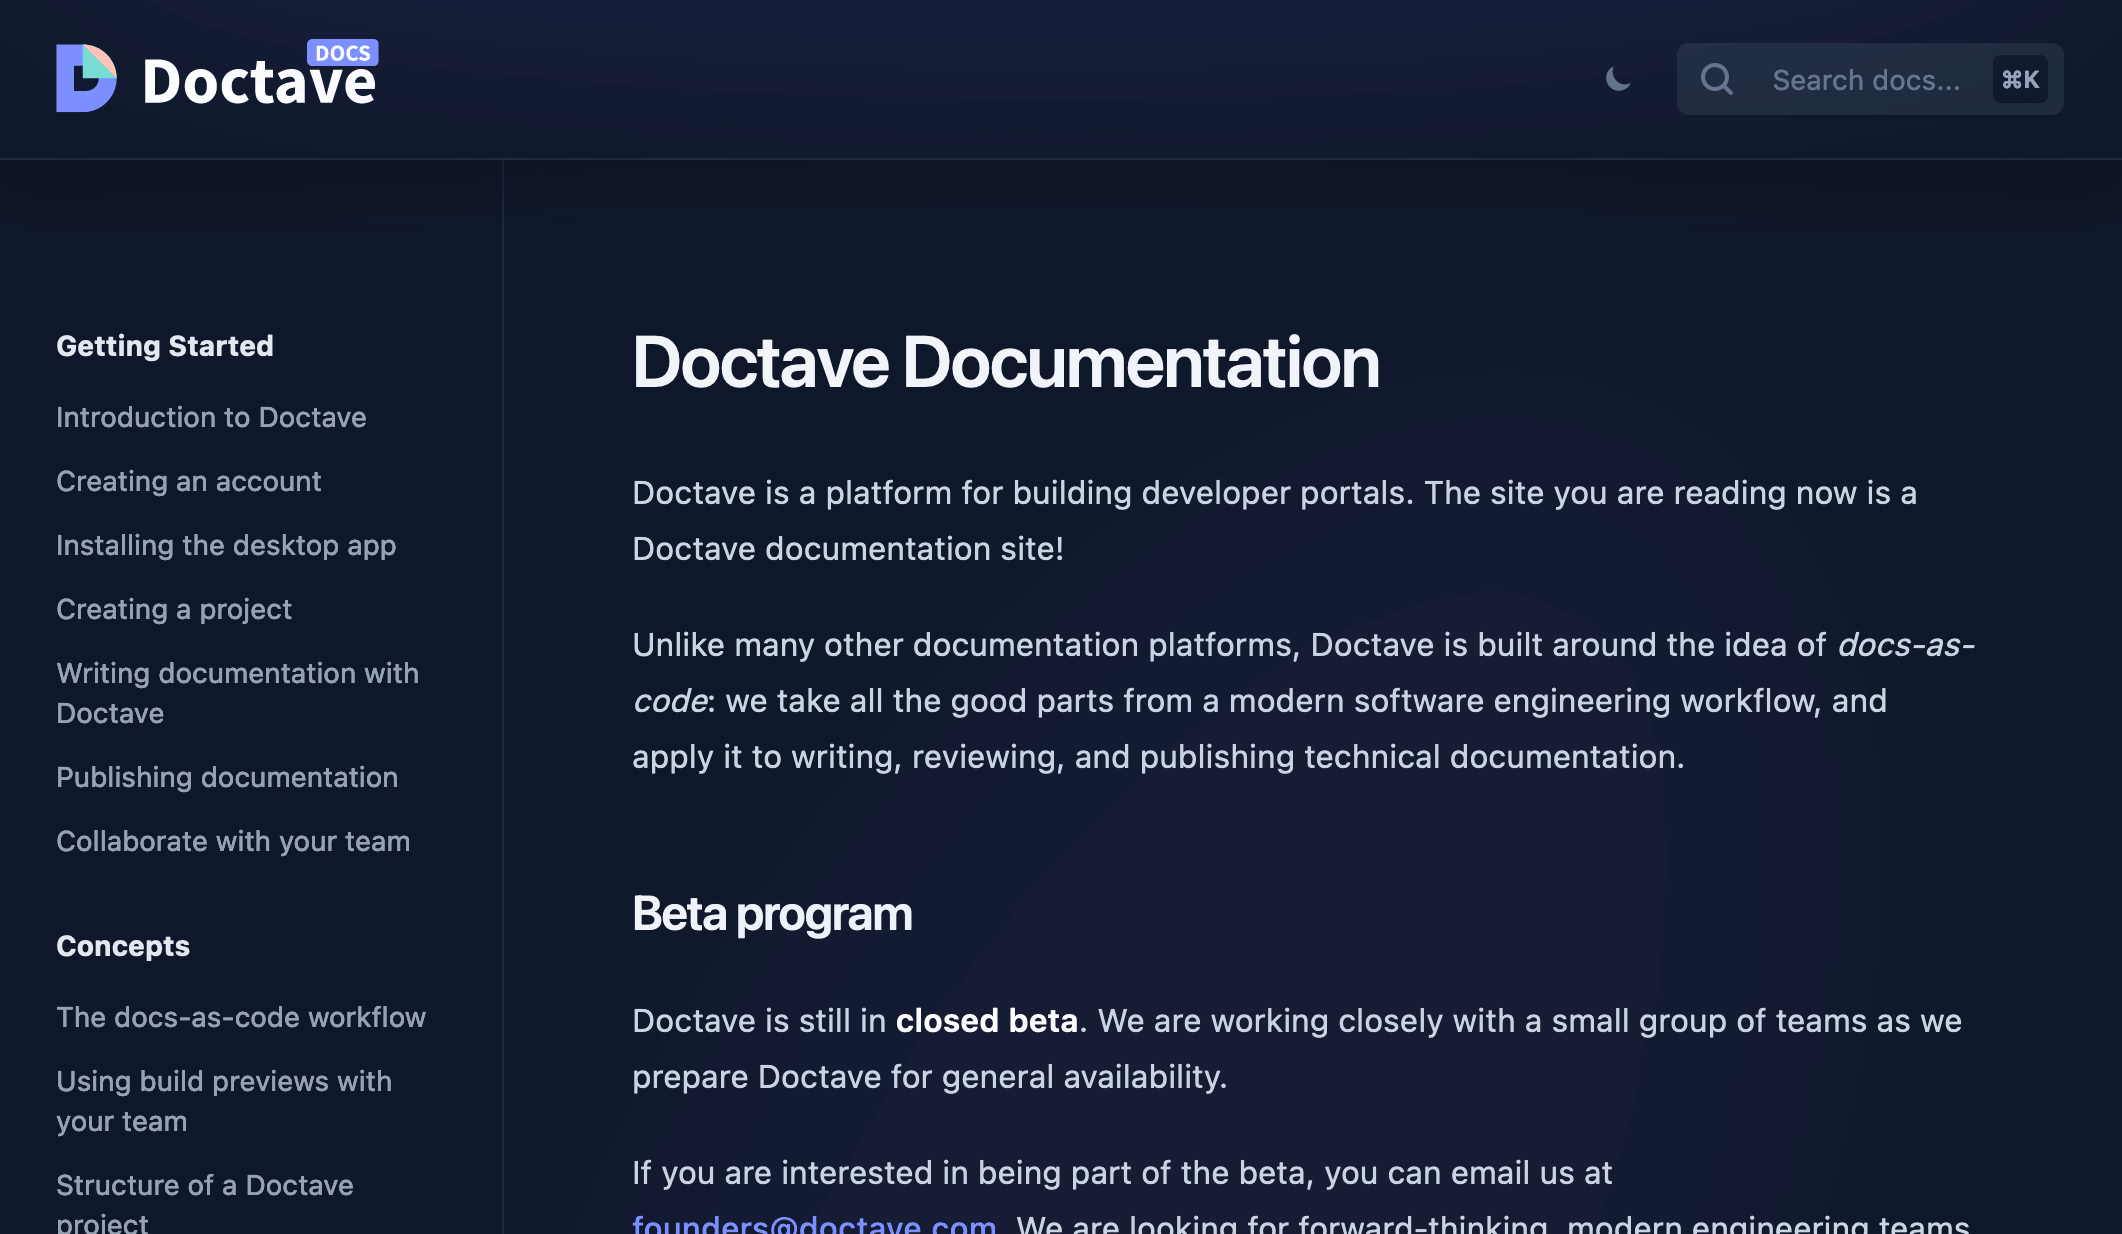 a screenshot of Doctave's rewritten documentation 
site